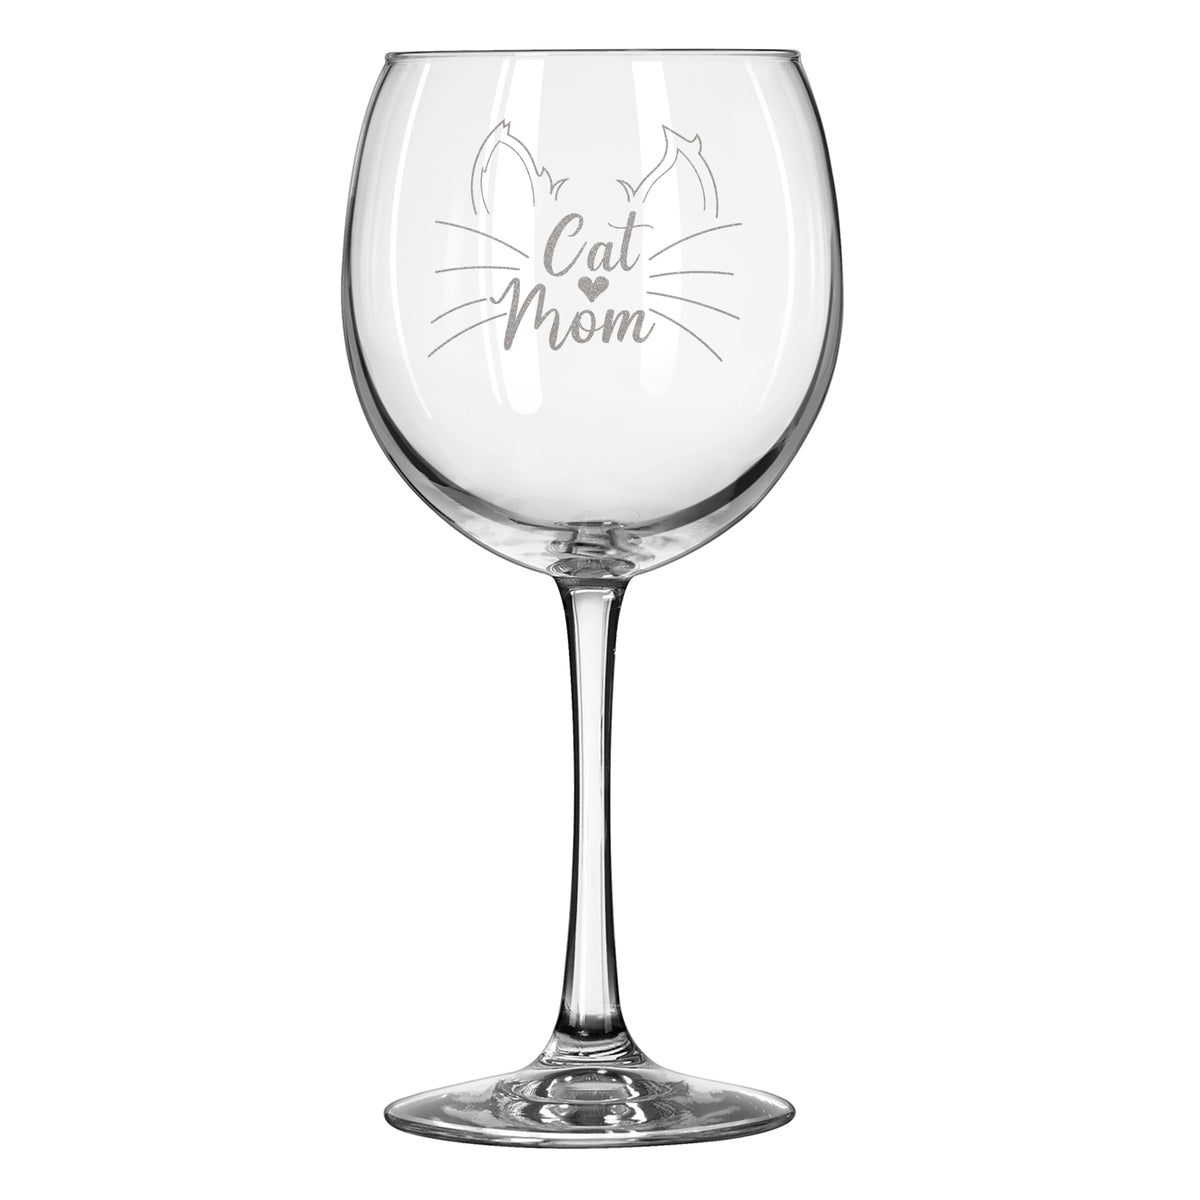 Buy Cat & Moon Design Wine Glass, Cute Mystical Glass online